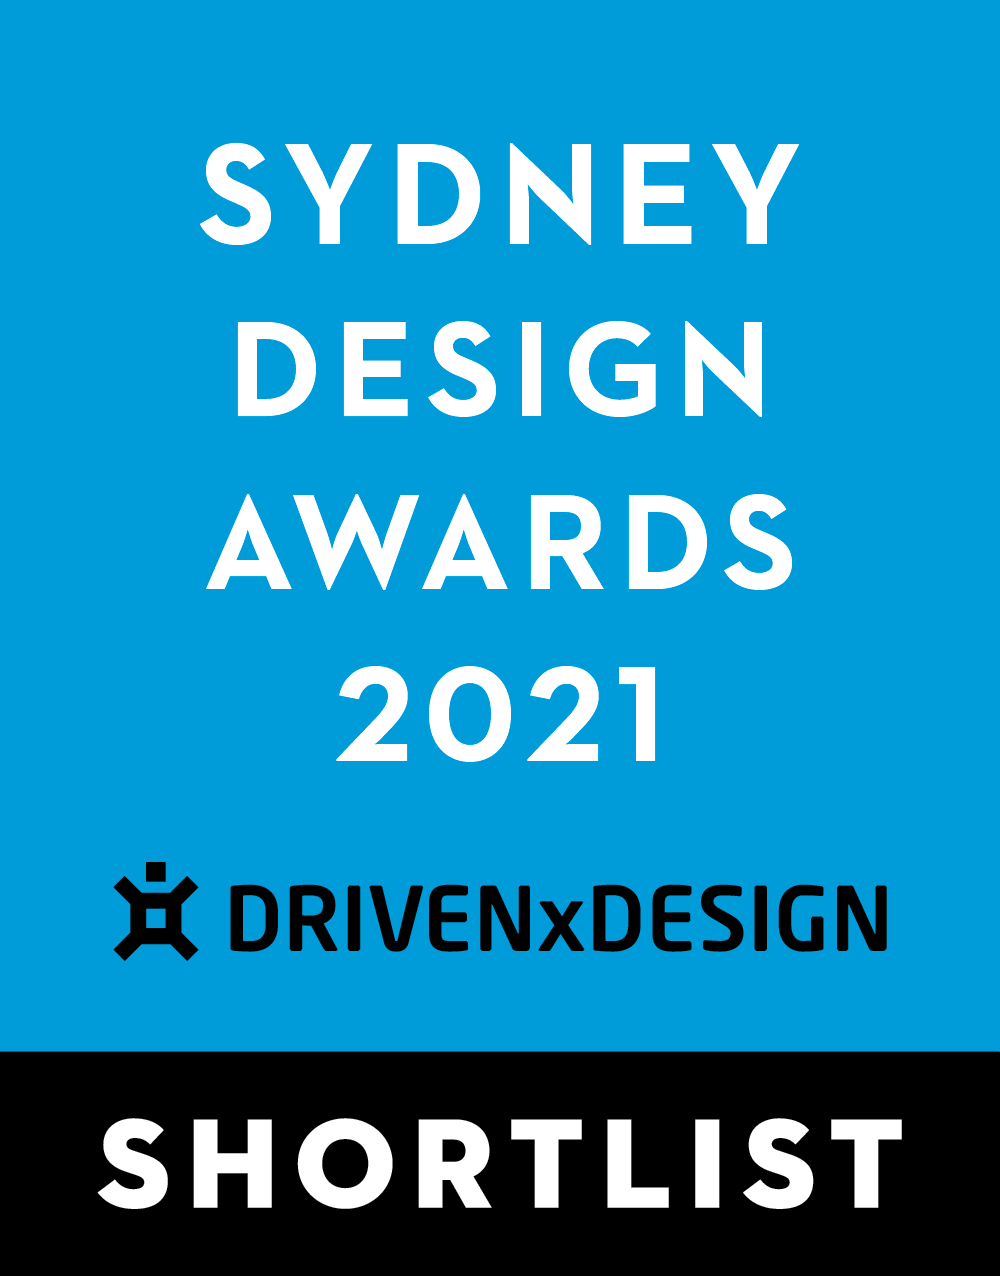 Sydney design awards 2021 shortlist